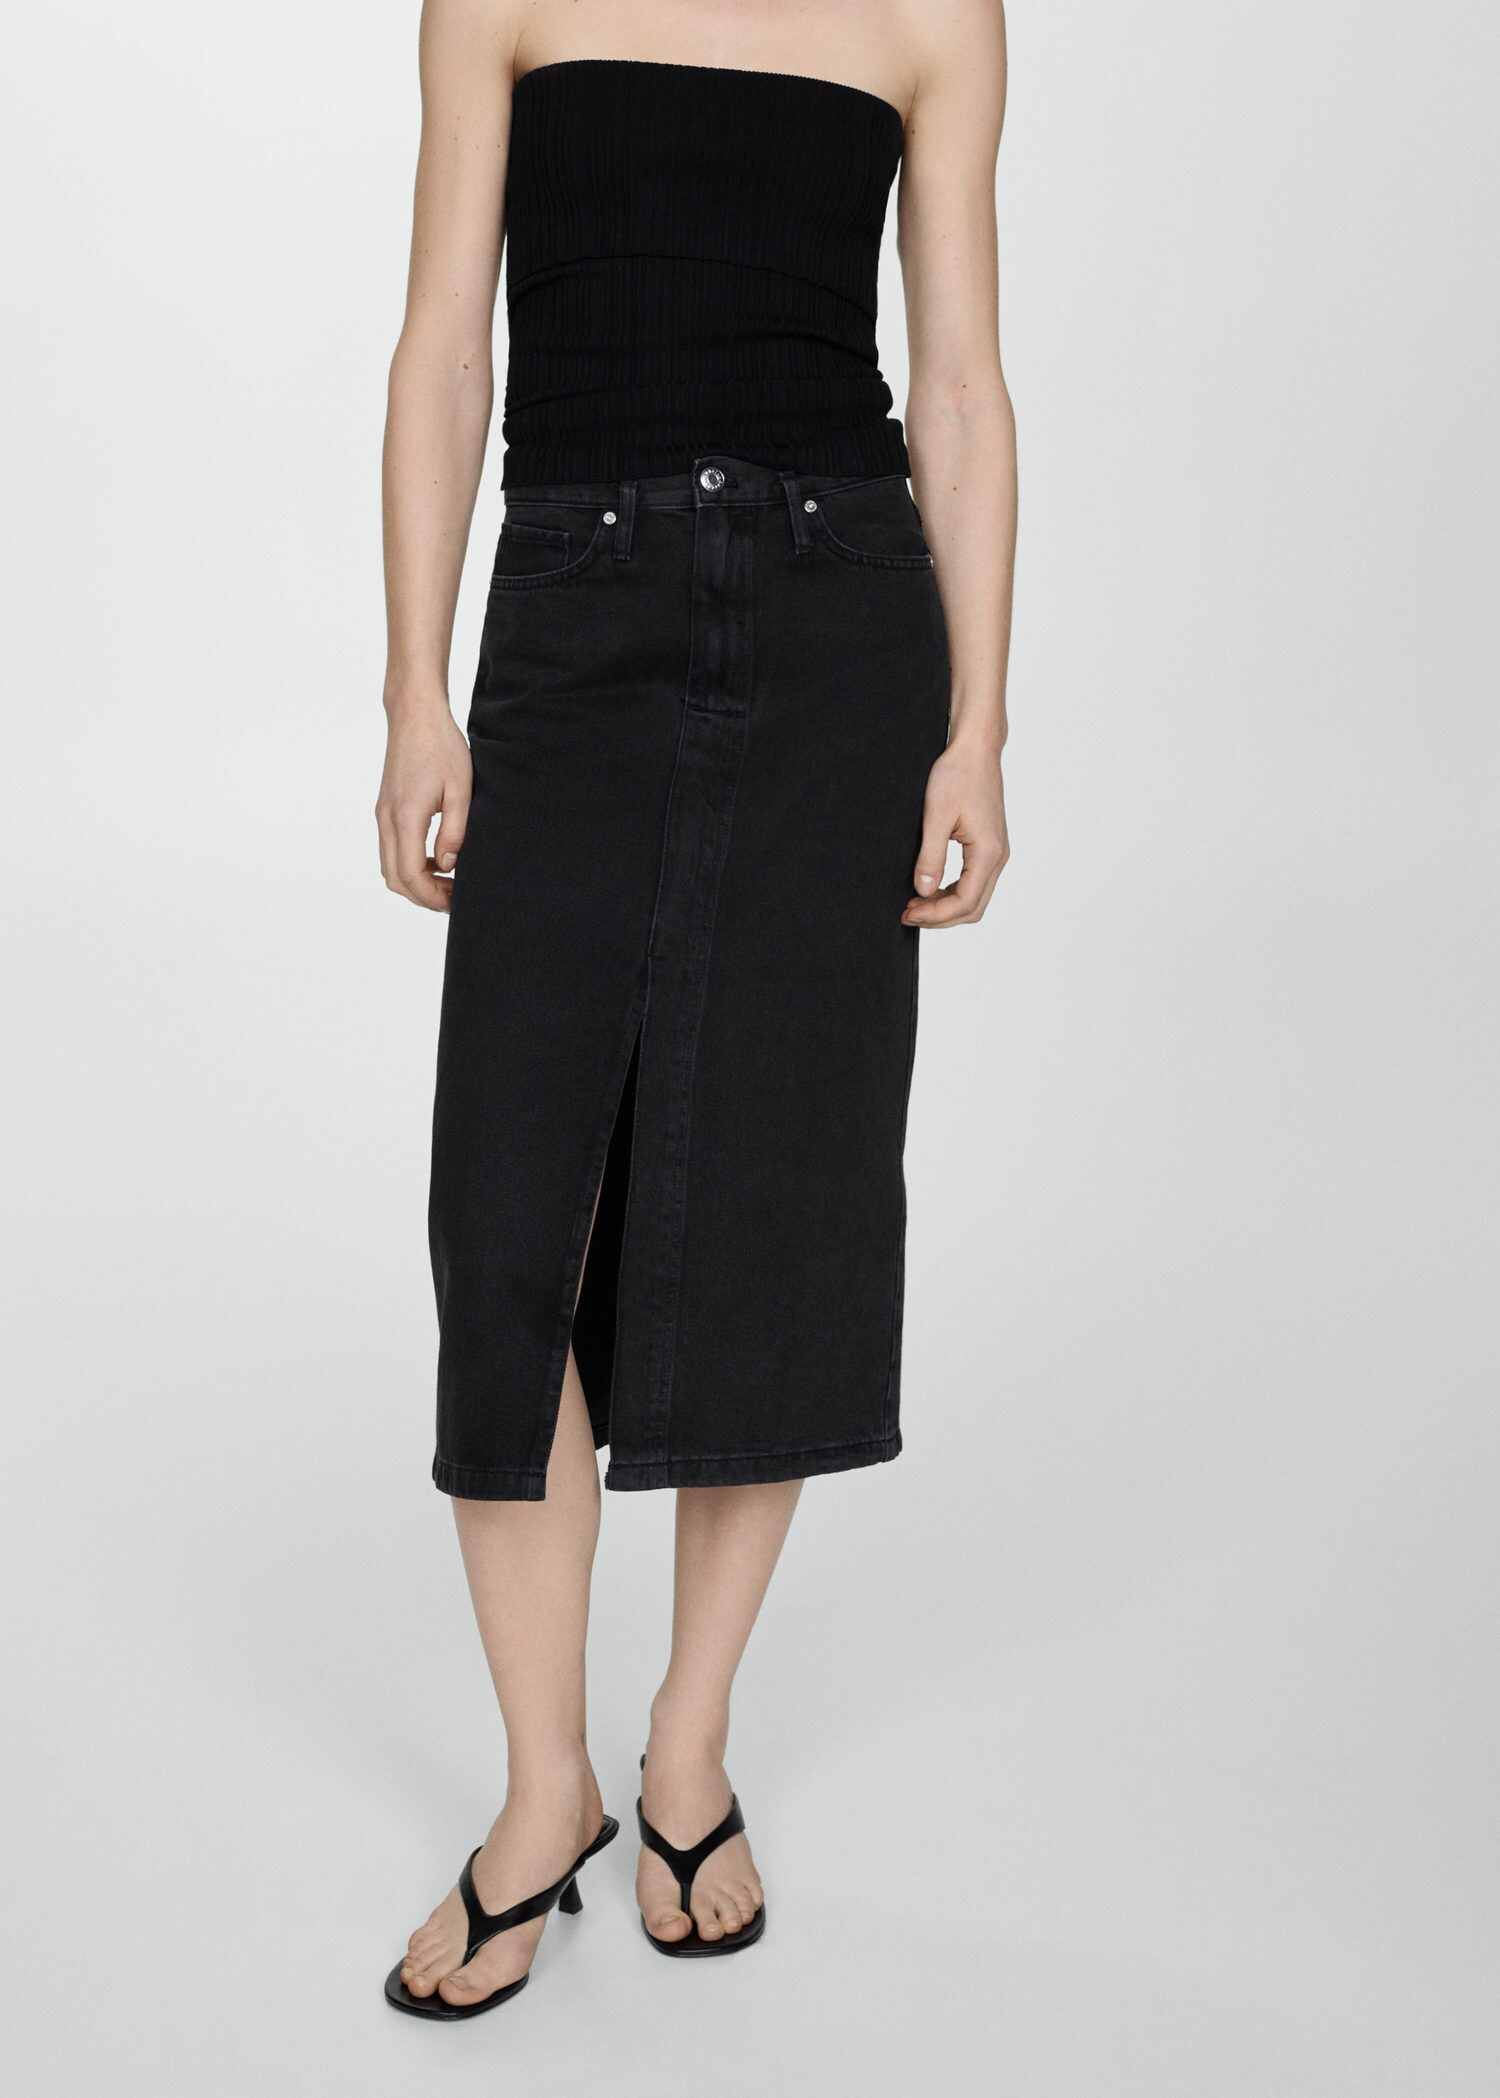 Short denim skirt - Black - Ladies | H&M IN